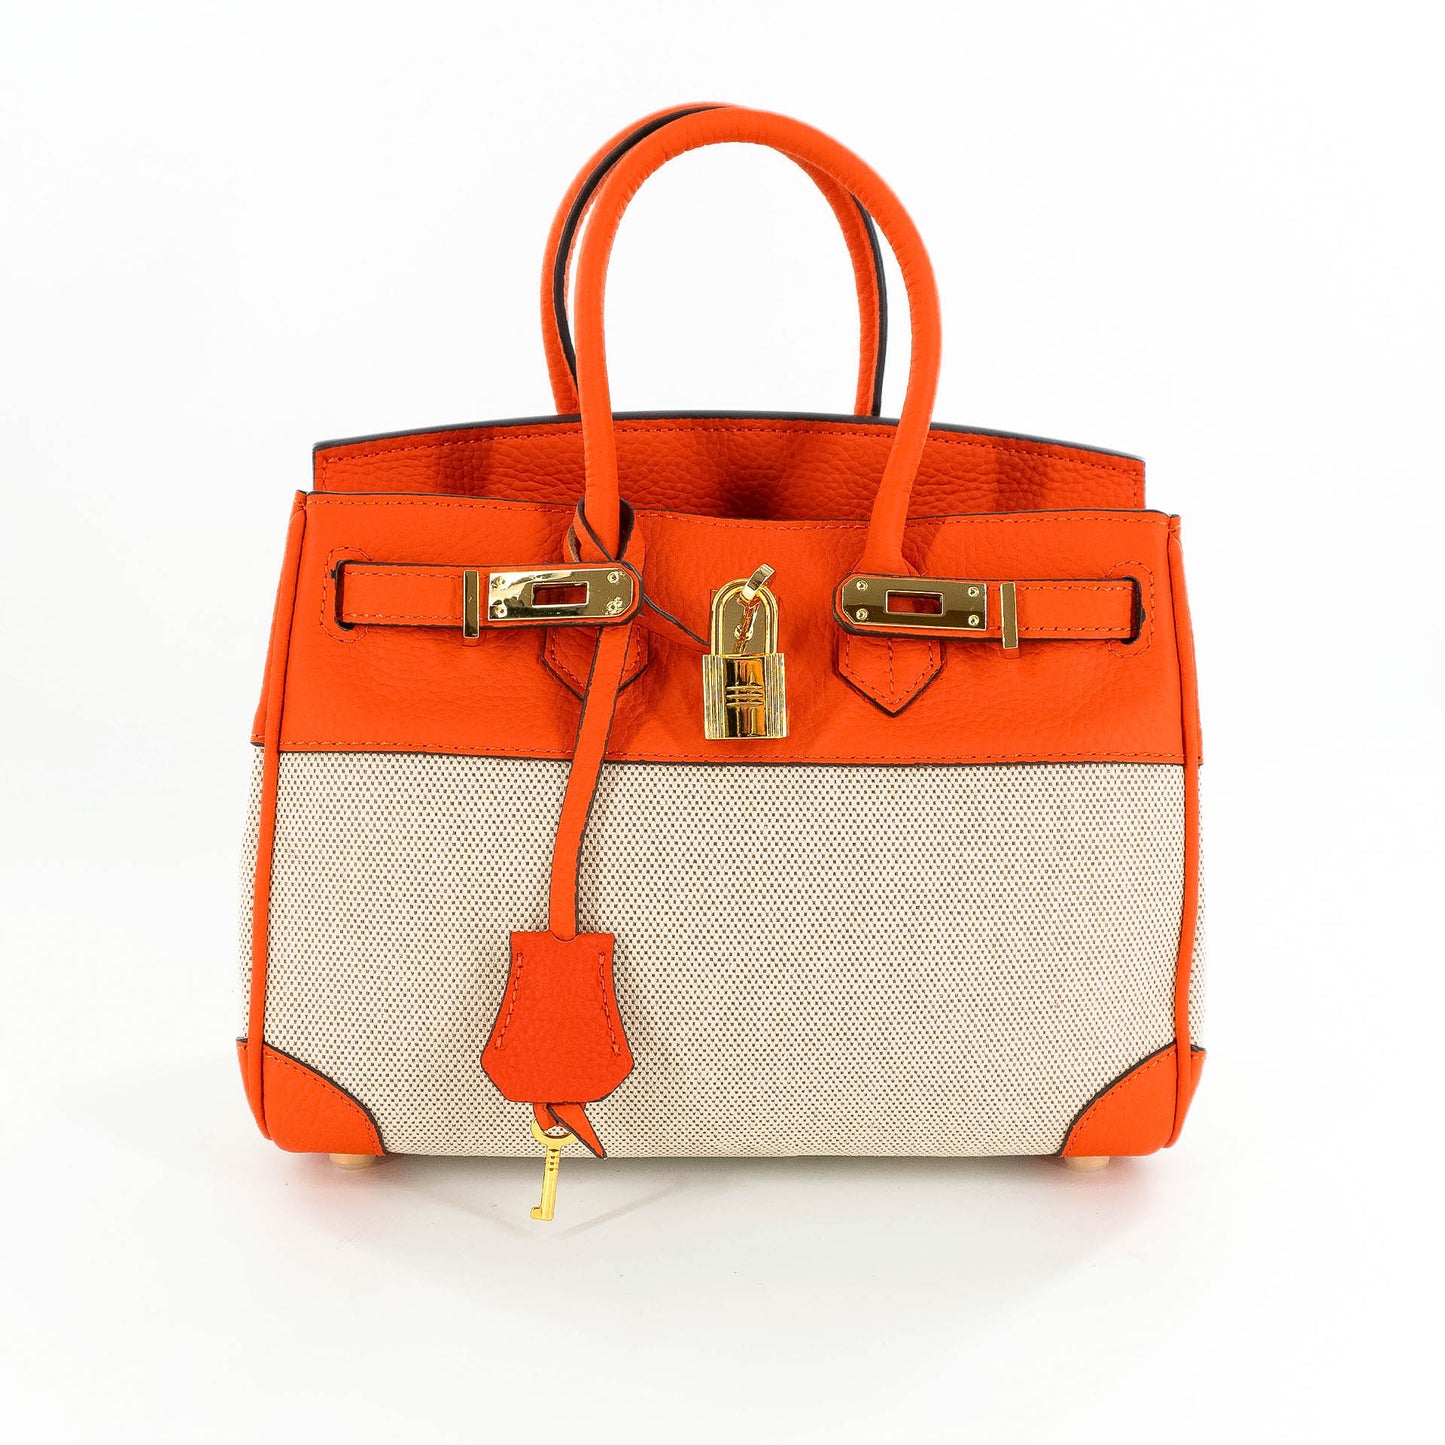 Duchess Handbag in Linen and Orange Leather